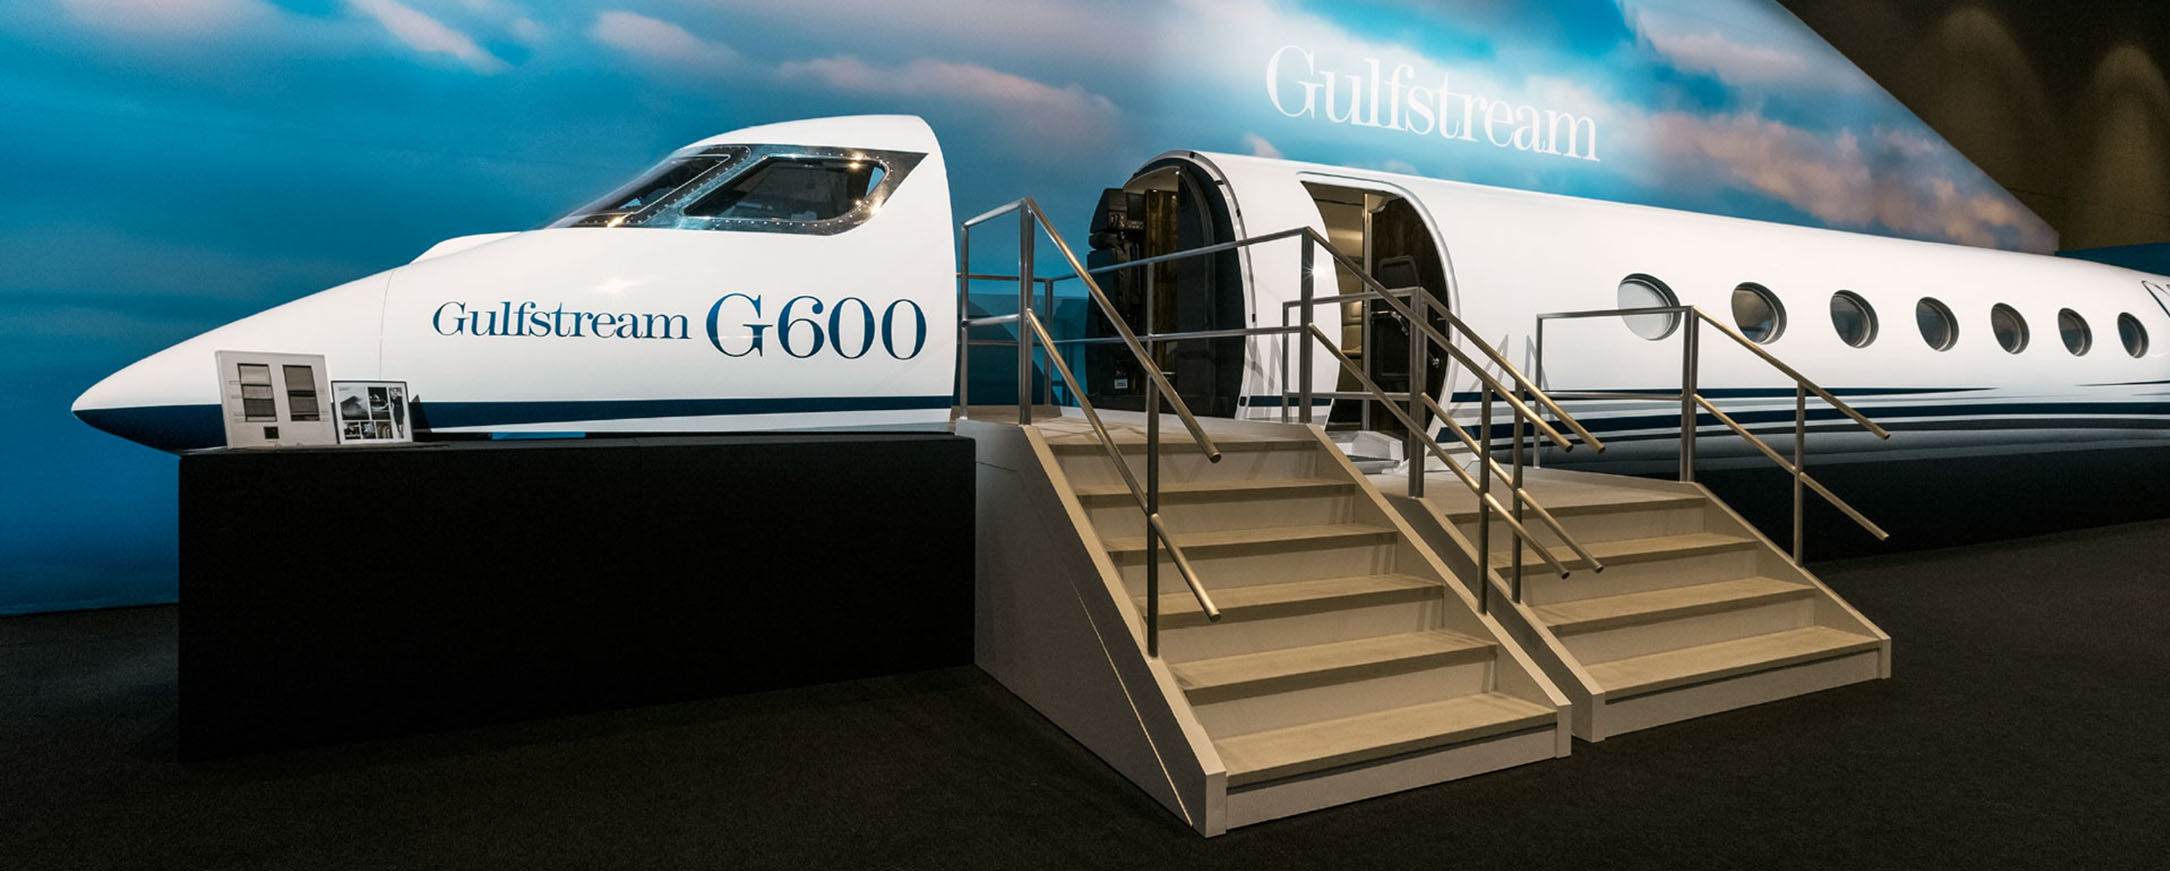 Gulfstream G600 prototype on display